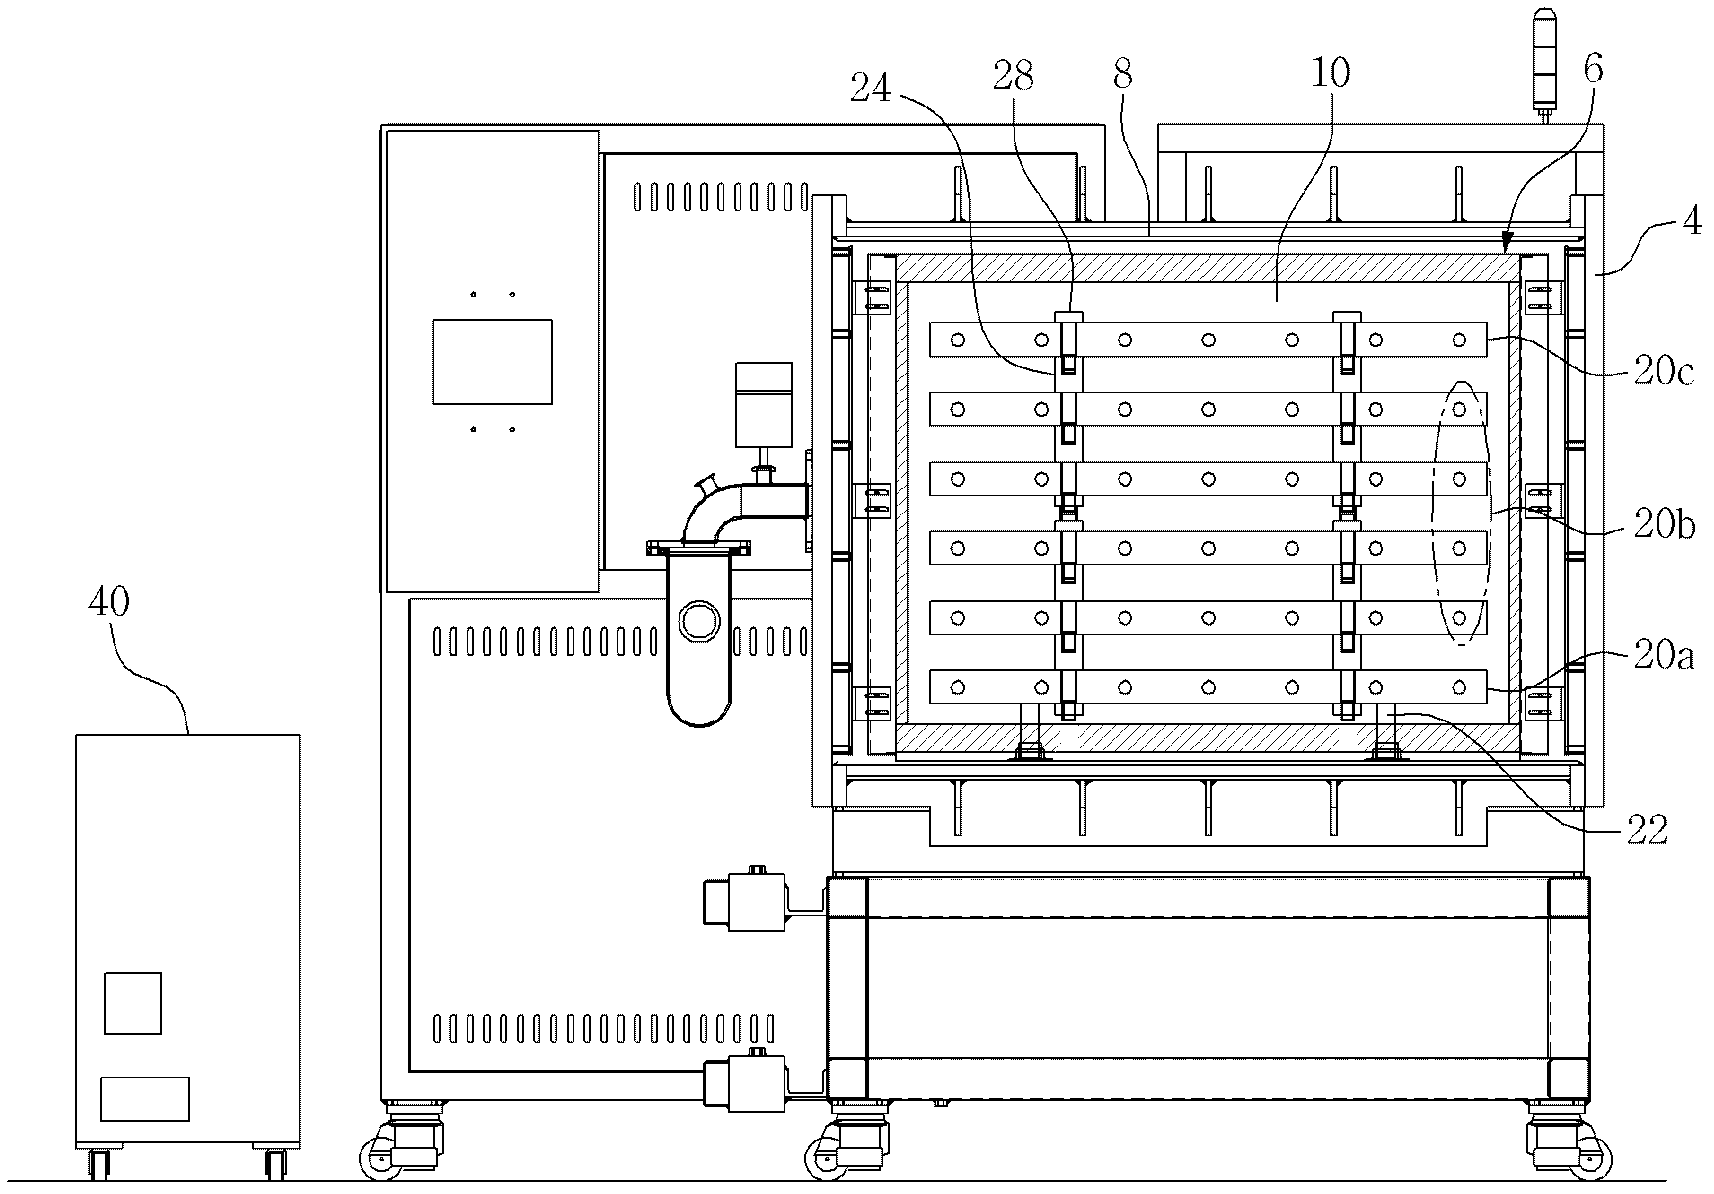 Graphite heater furnace